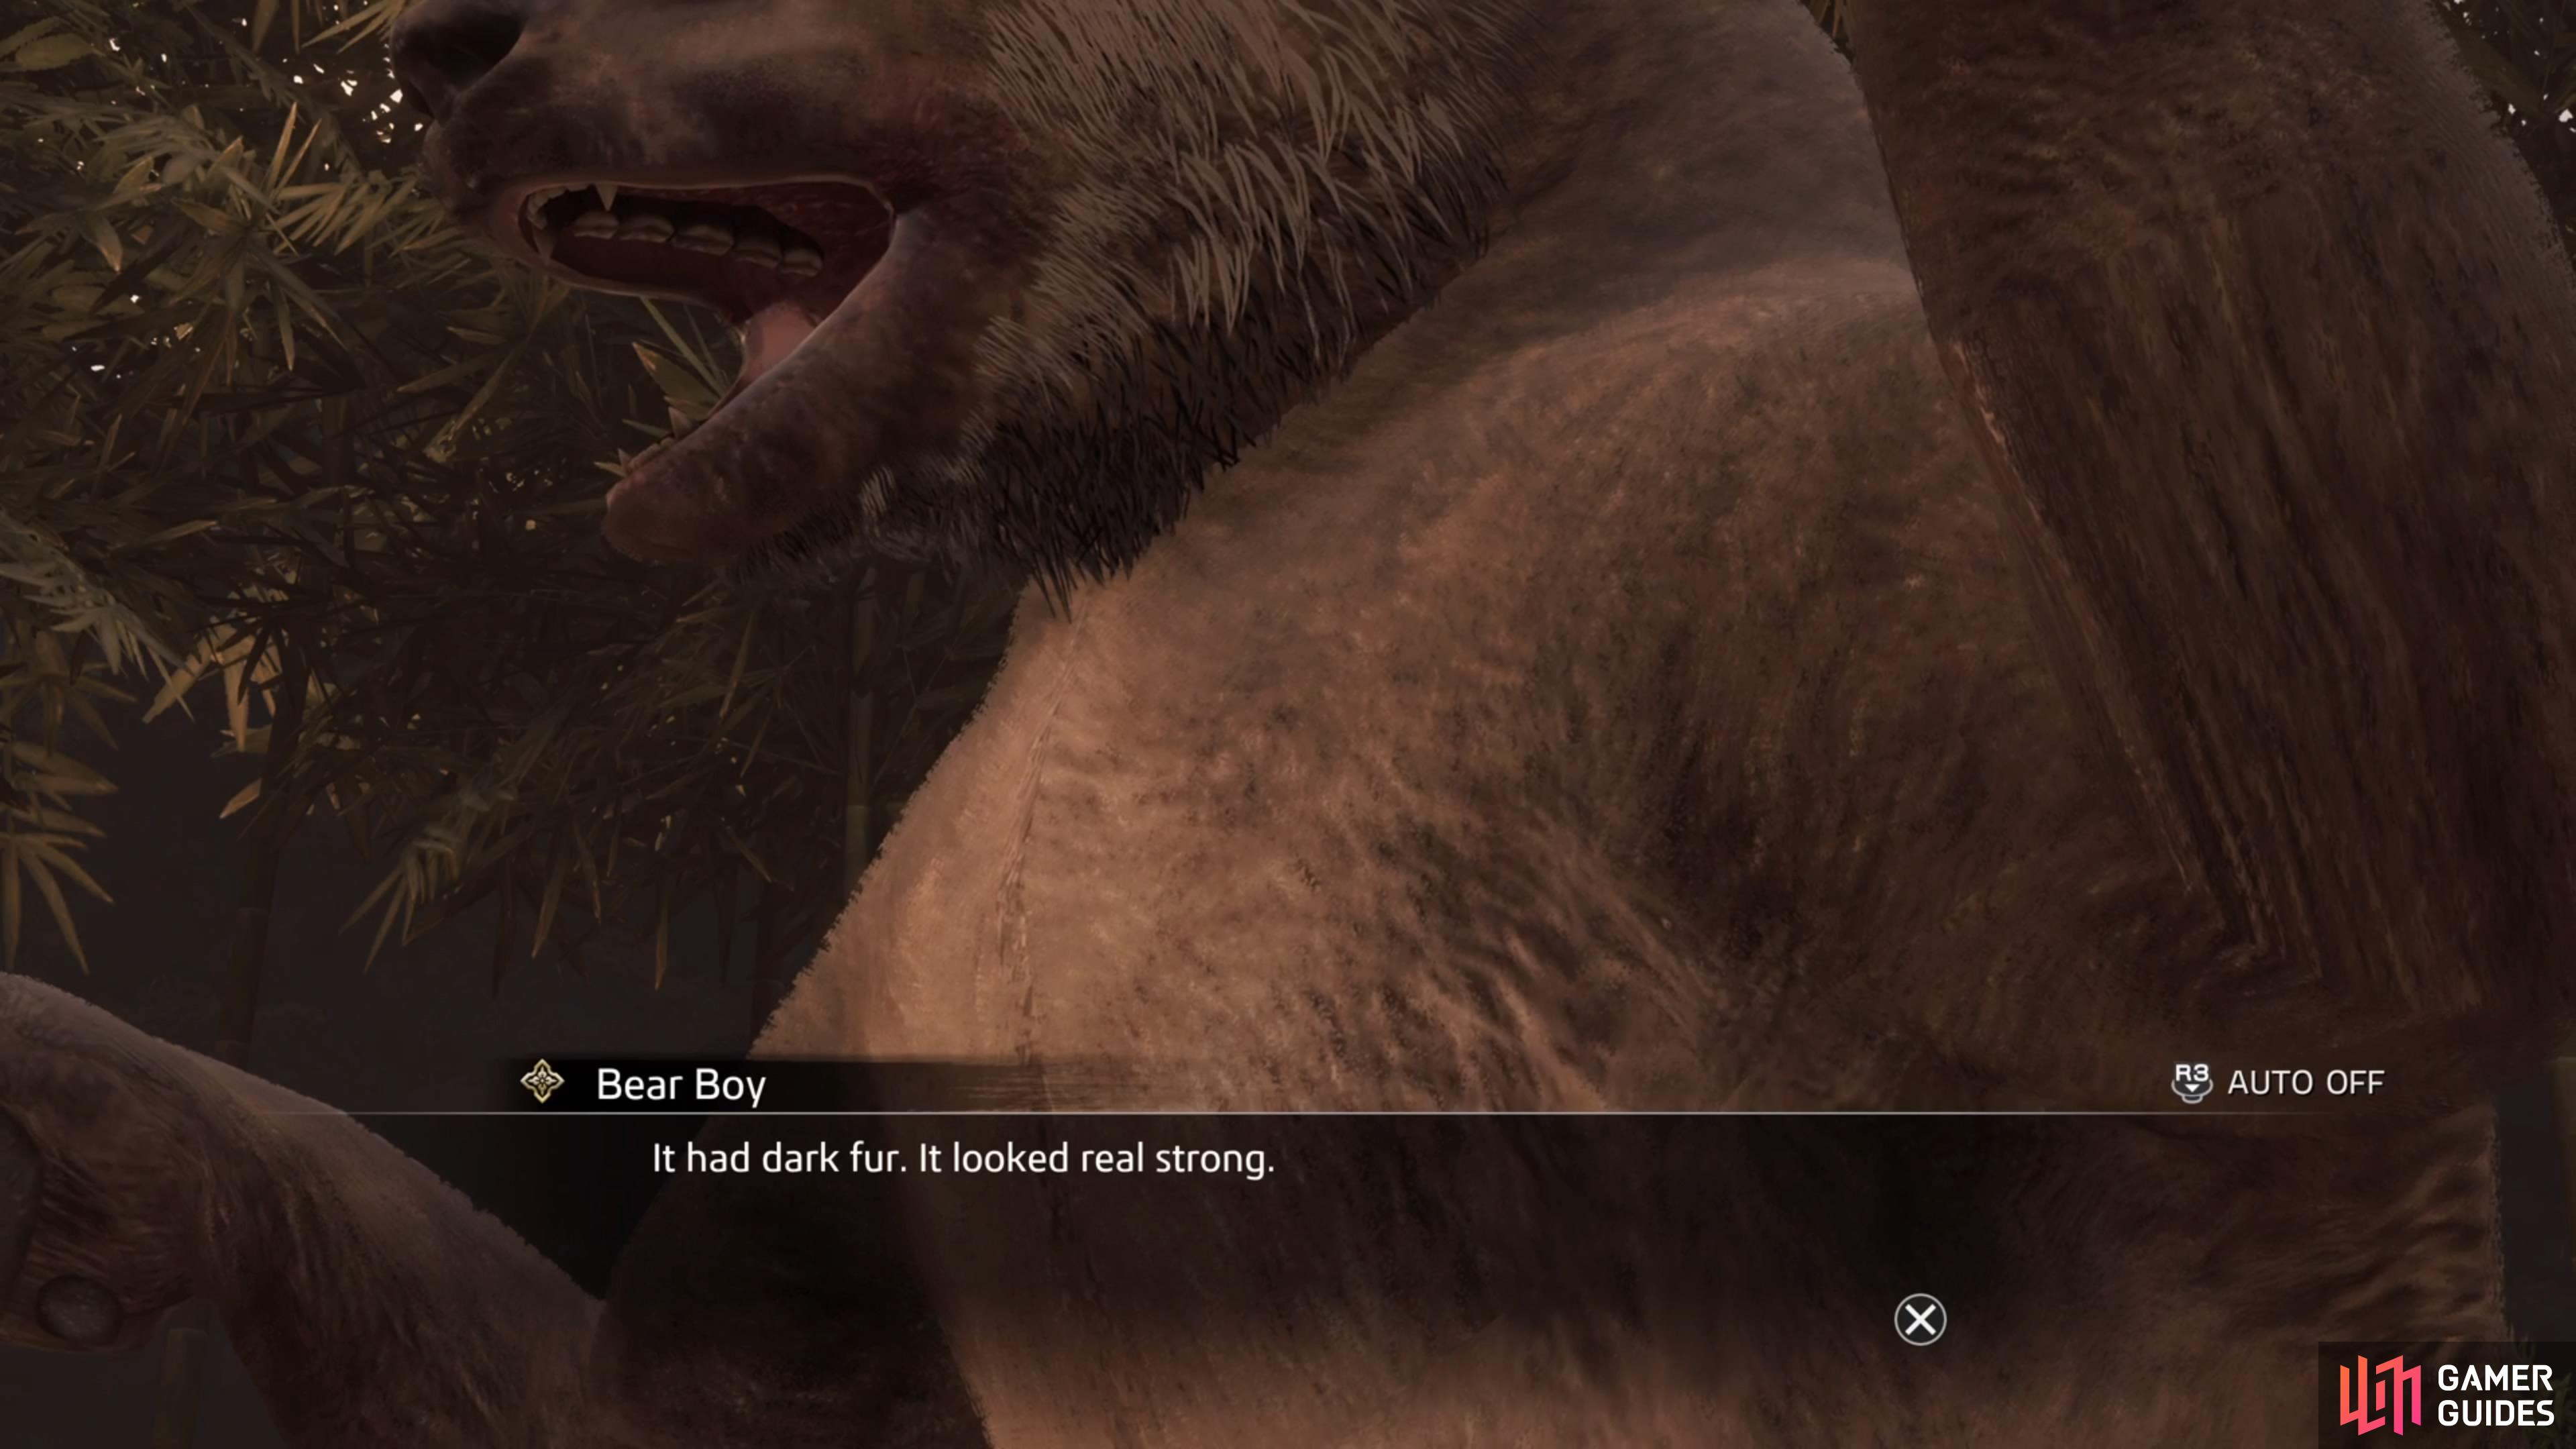 Yep, you're fighting a bear